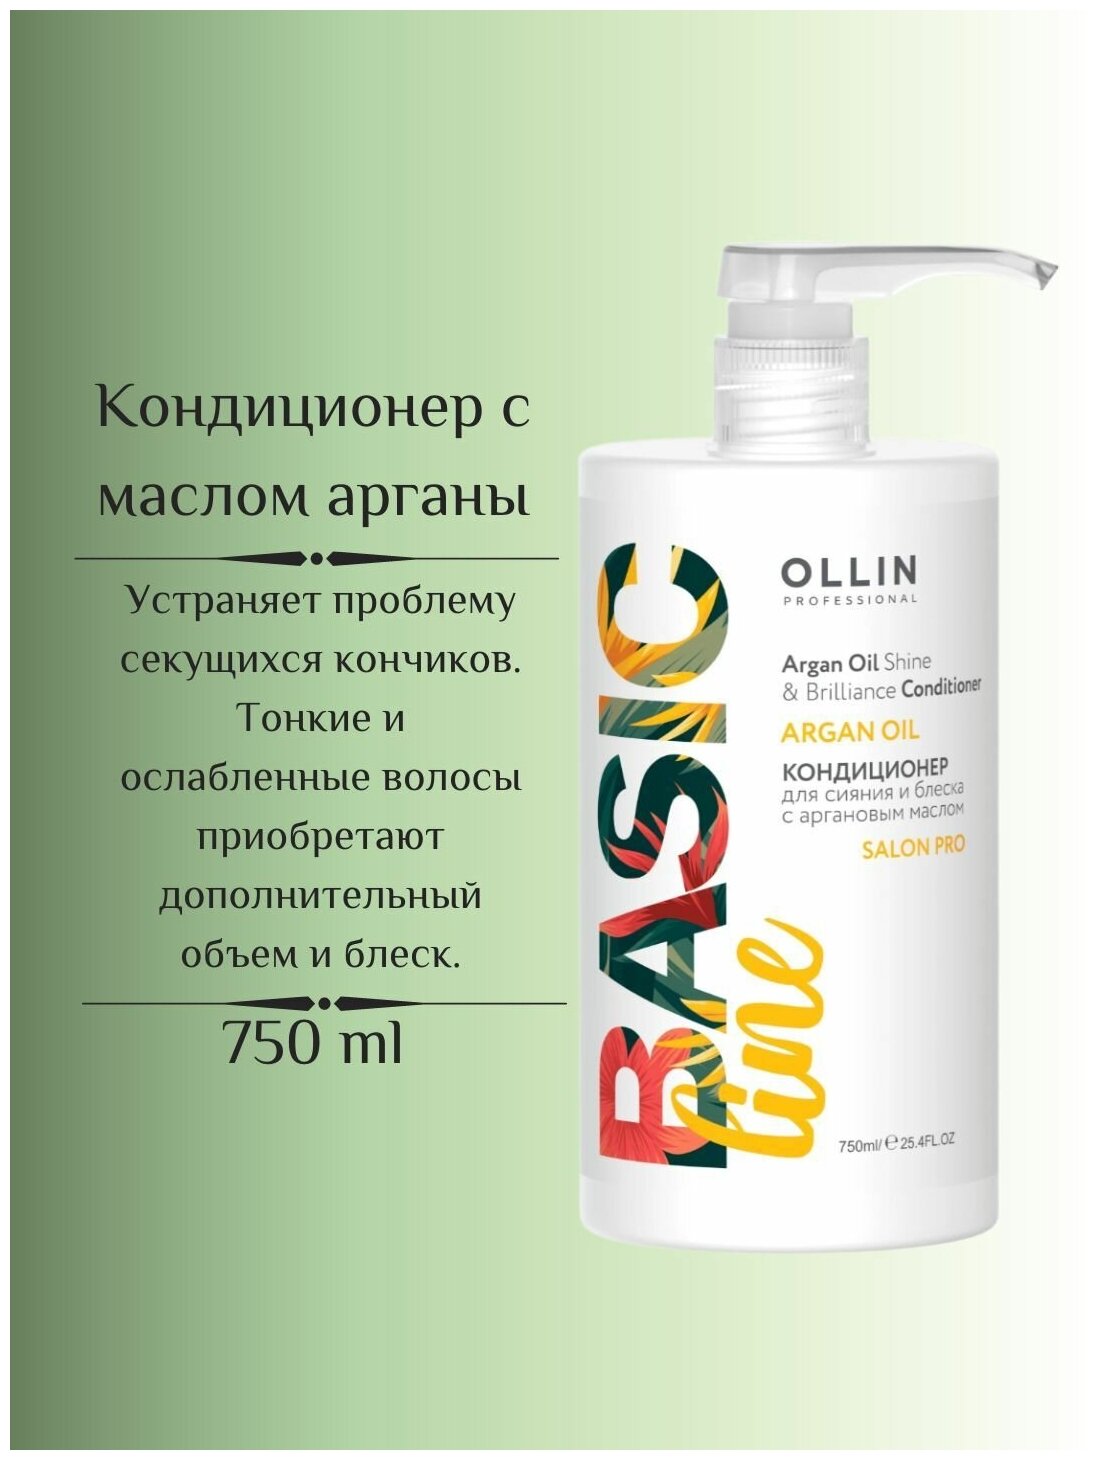 Ollin Professional Кондиционер для сияния и блеска с аргановым маслом 750 мл (Ollin Professional, ) - фото №10